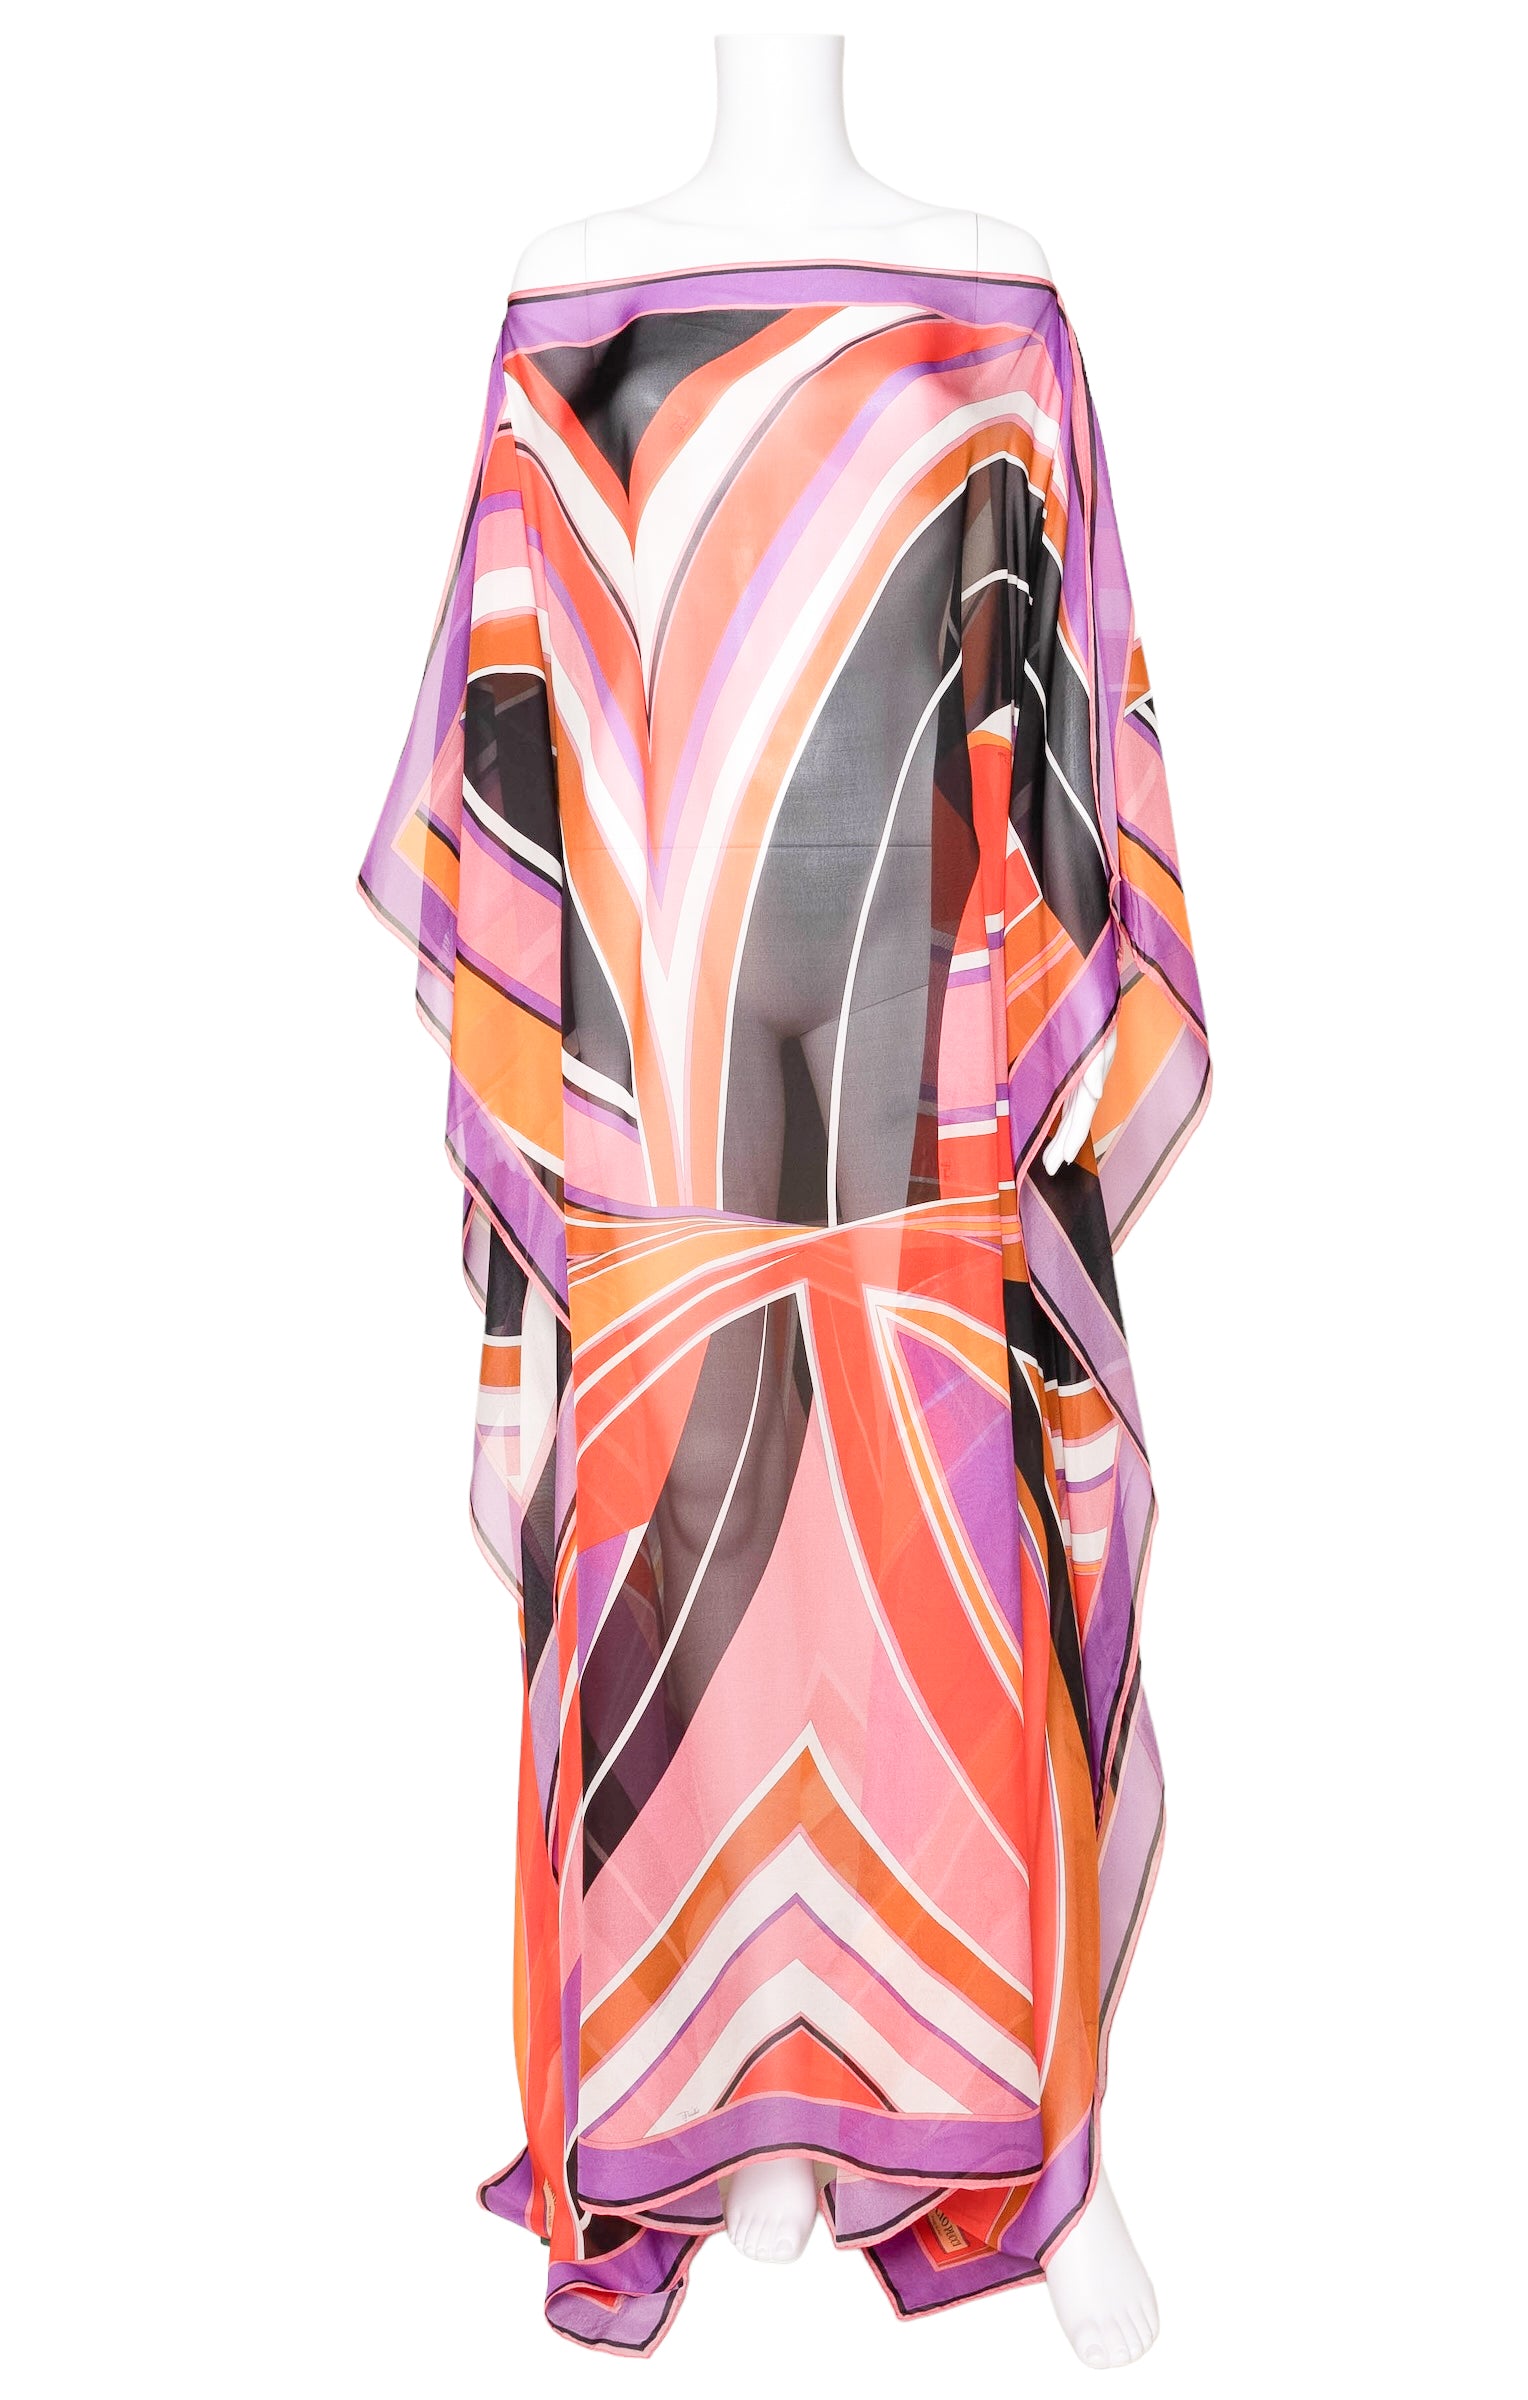 Knee length dresses Emilio Pucci - onde print kaftan dress - 3URL113U797016